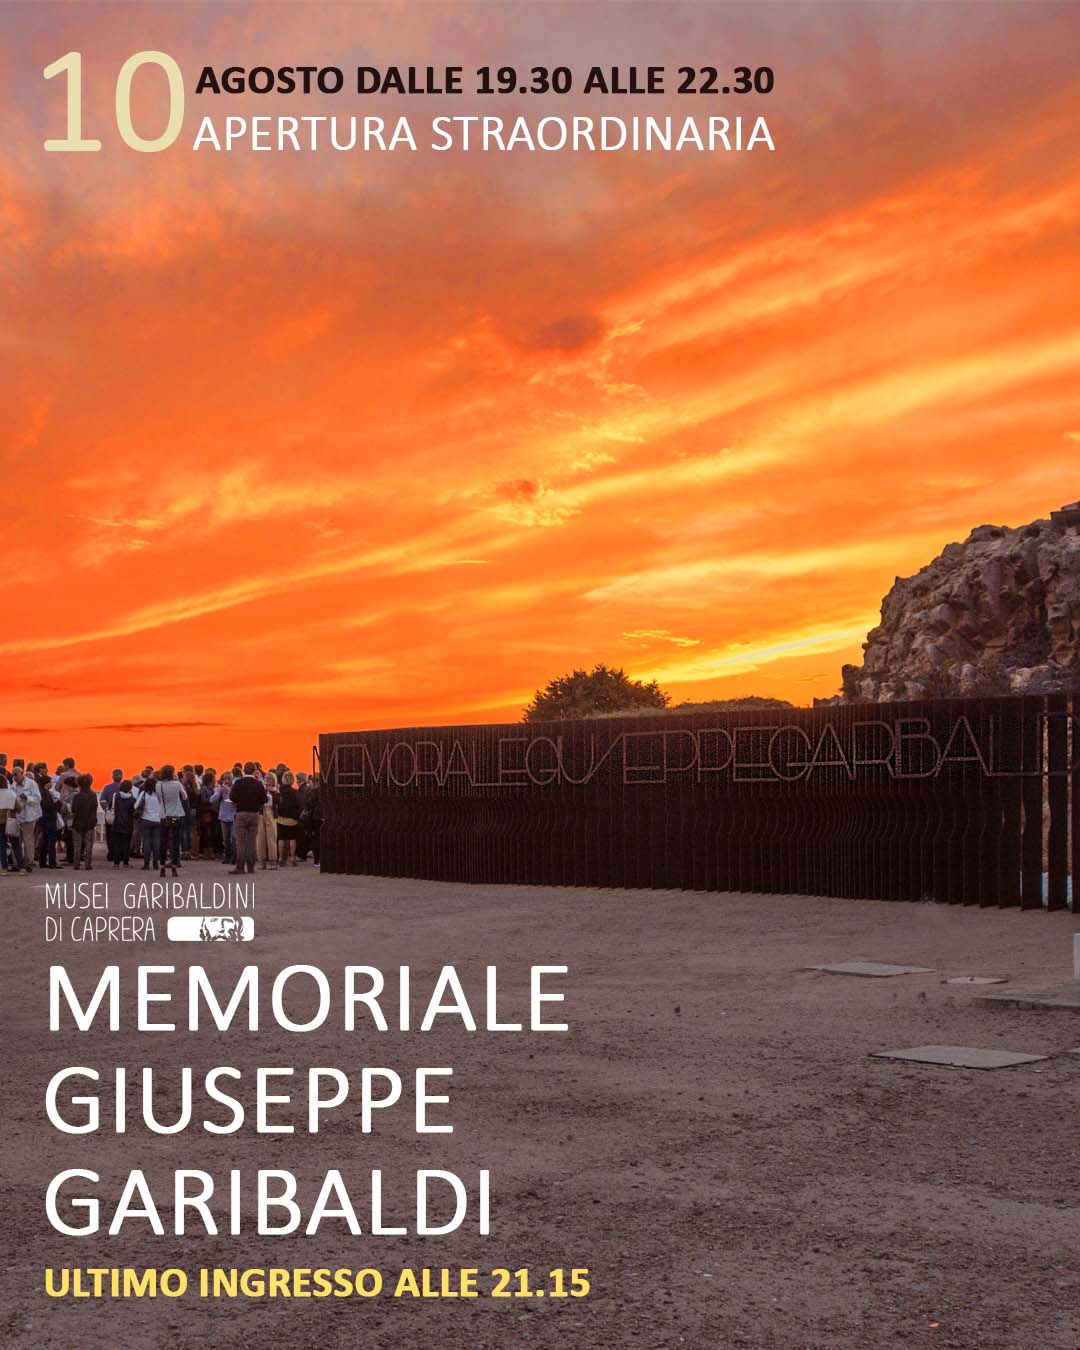 La tomba di Giuseppe Garibaldi